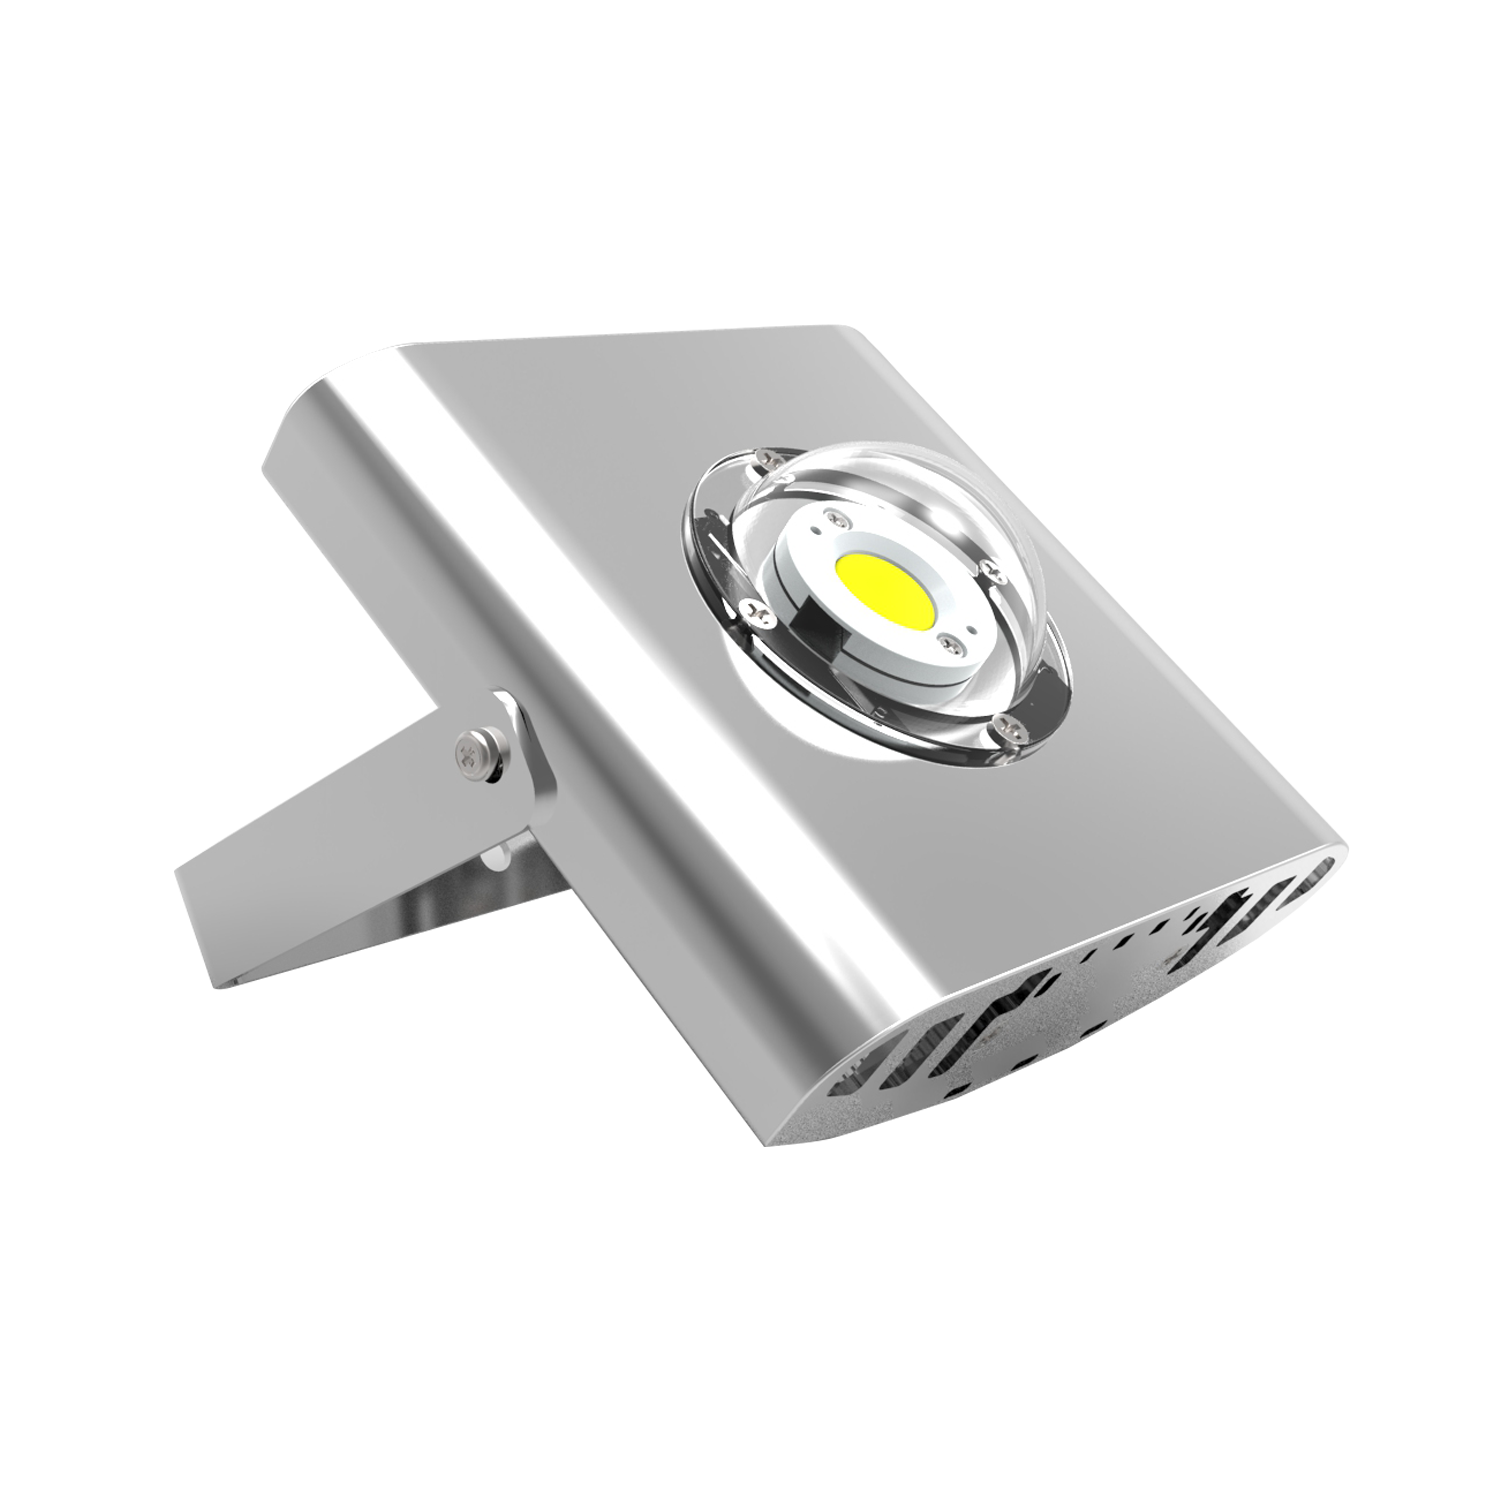 Aigostar - Confezione da 2 Faretto a LED COB，20W, 1800LM，Impermeabile IP65, Luce Naturale 4000K[Classe di efficienza energetica A+]